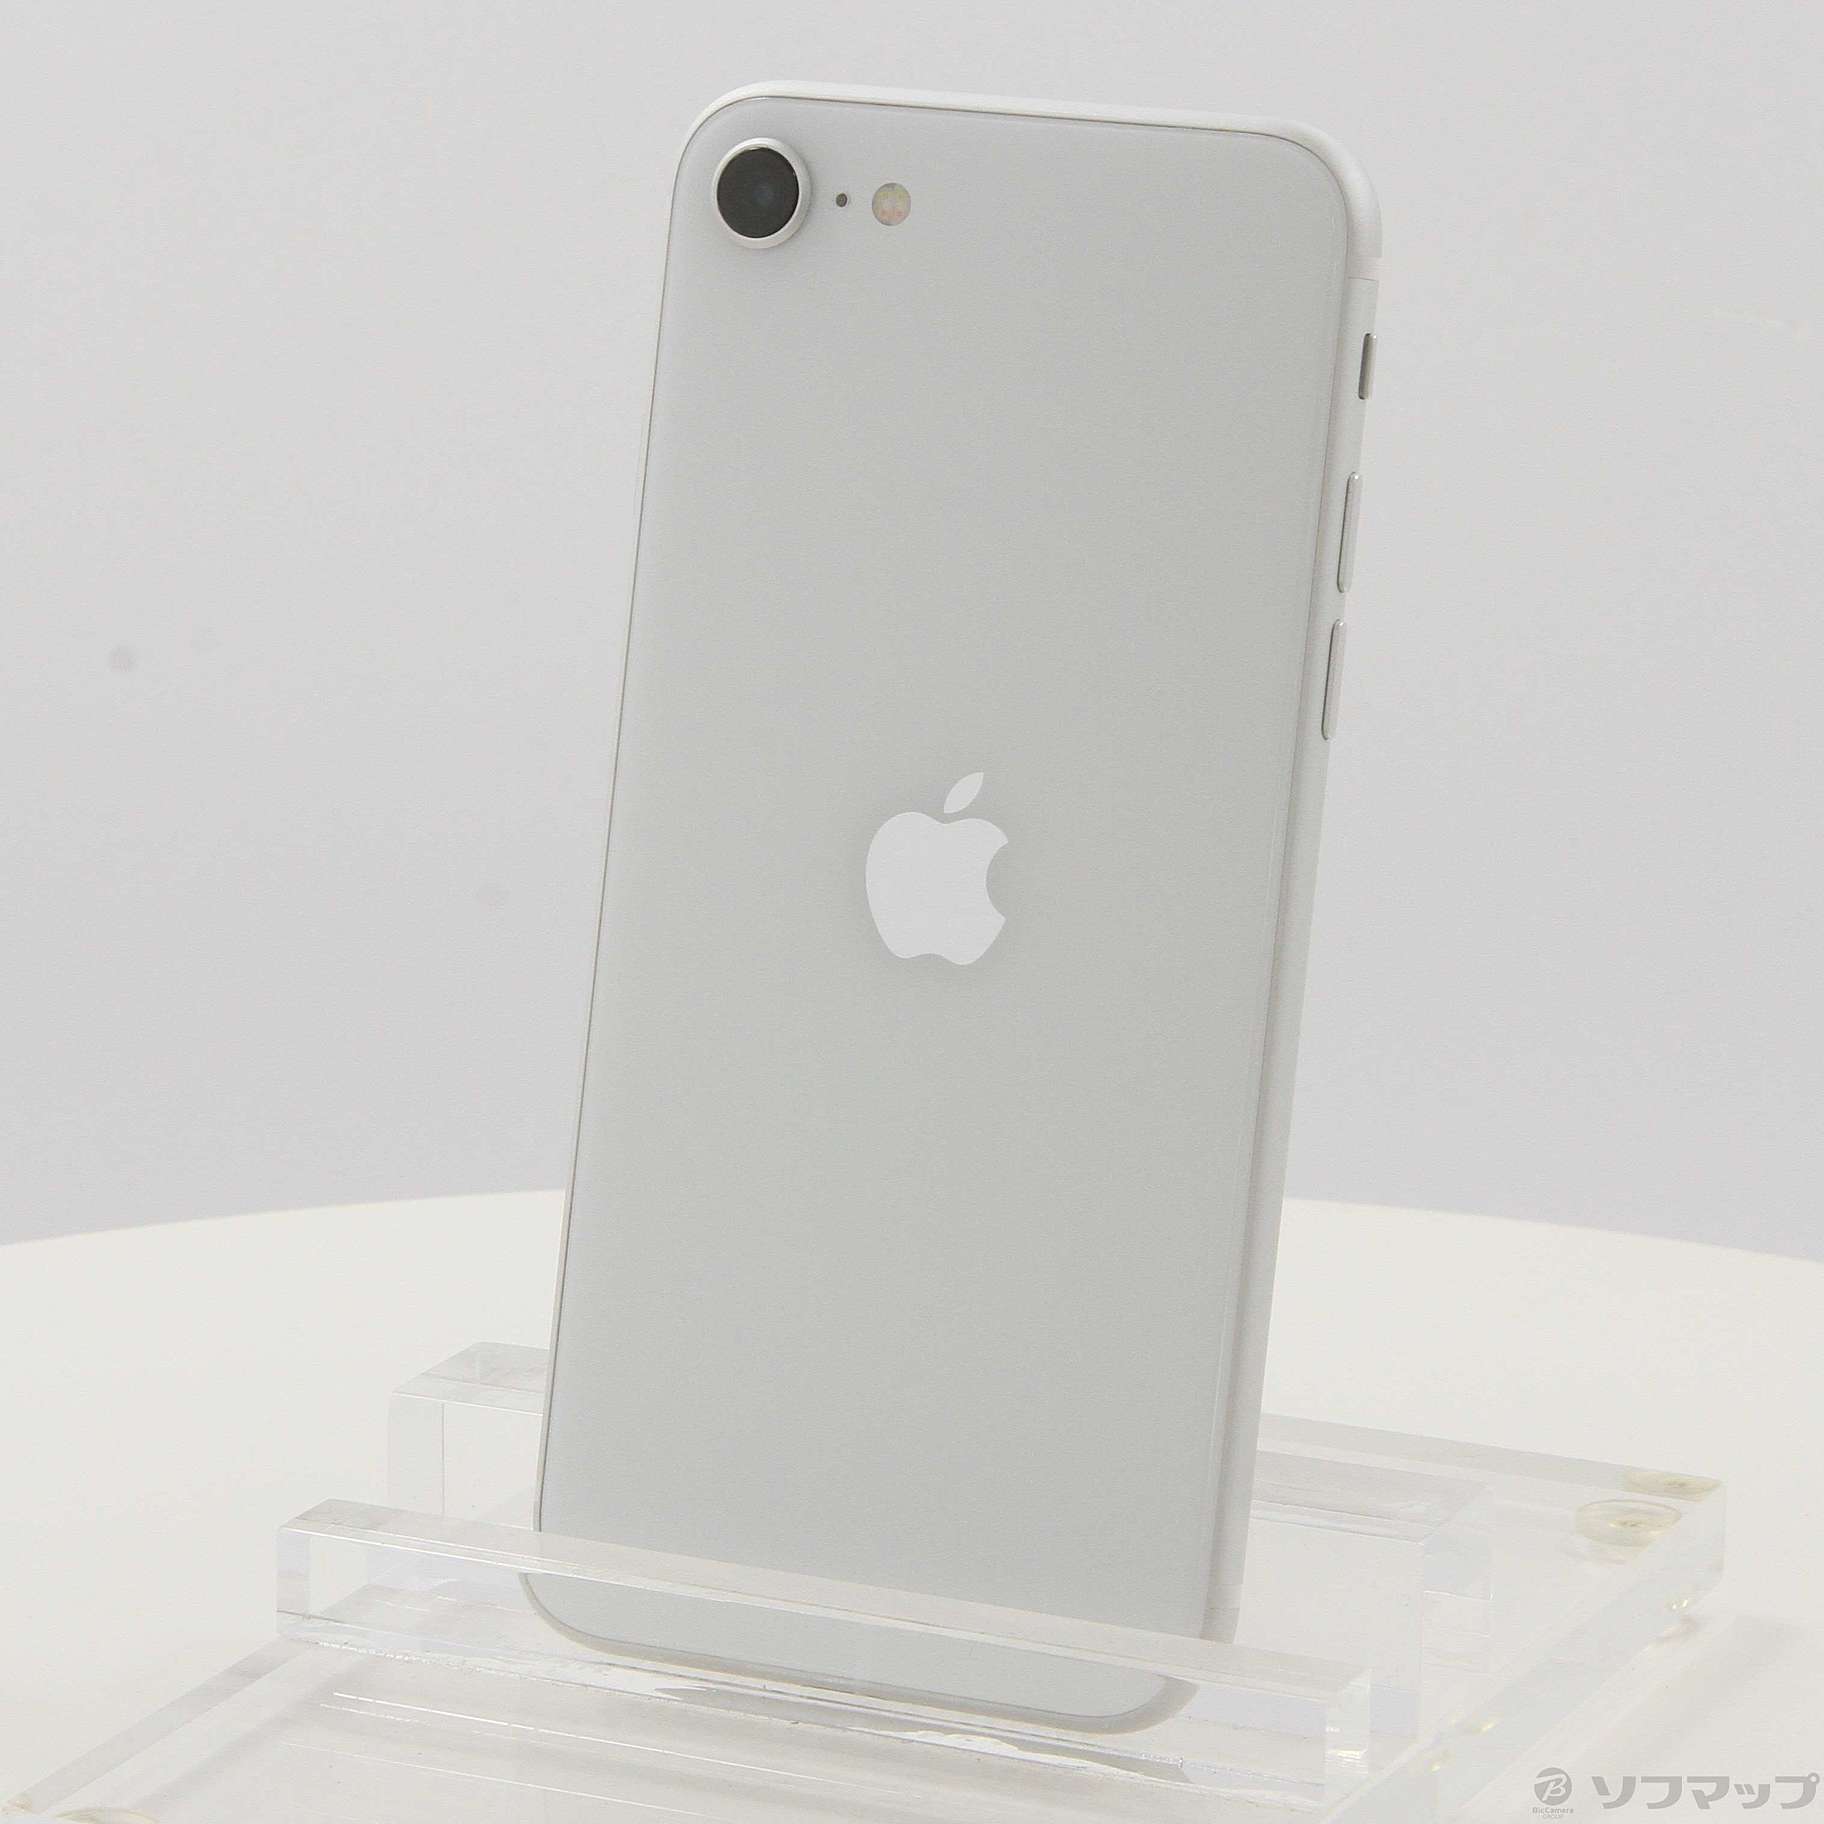 iPhone SE 第2世代 (SE2) ホワイト 64 GB SIMフリー解除済simフリー状態